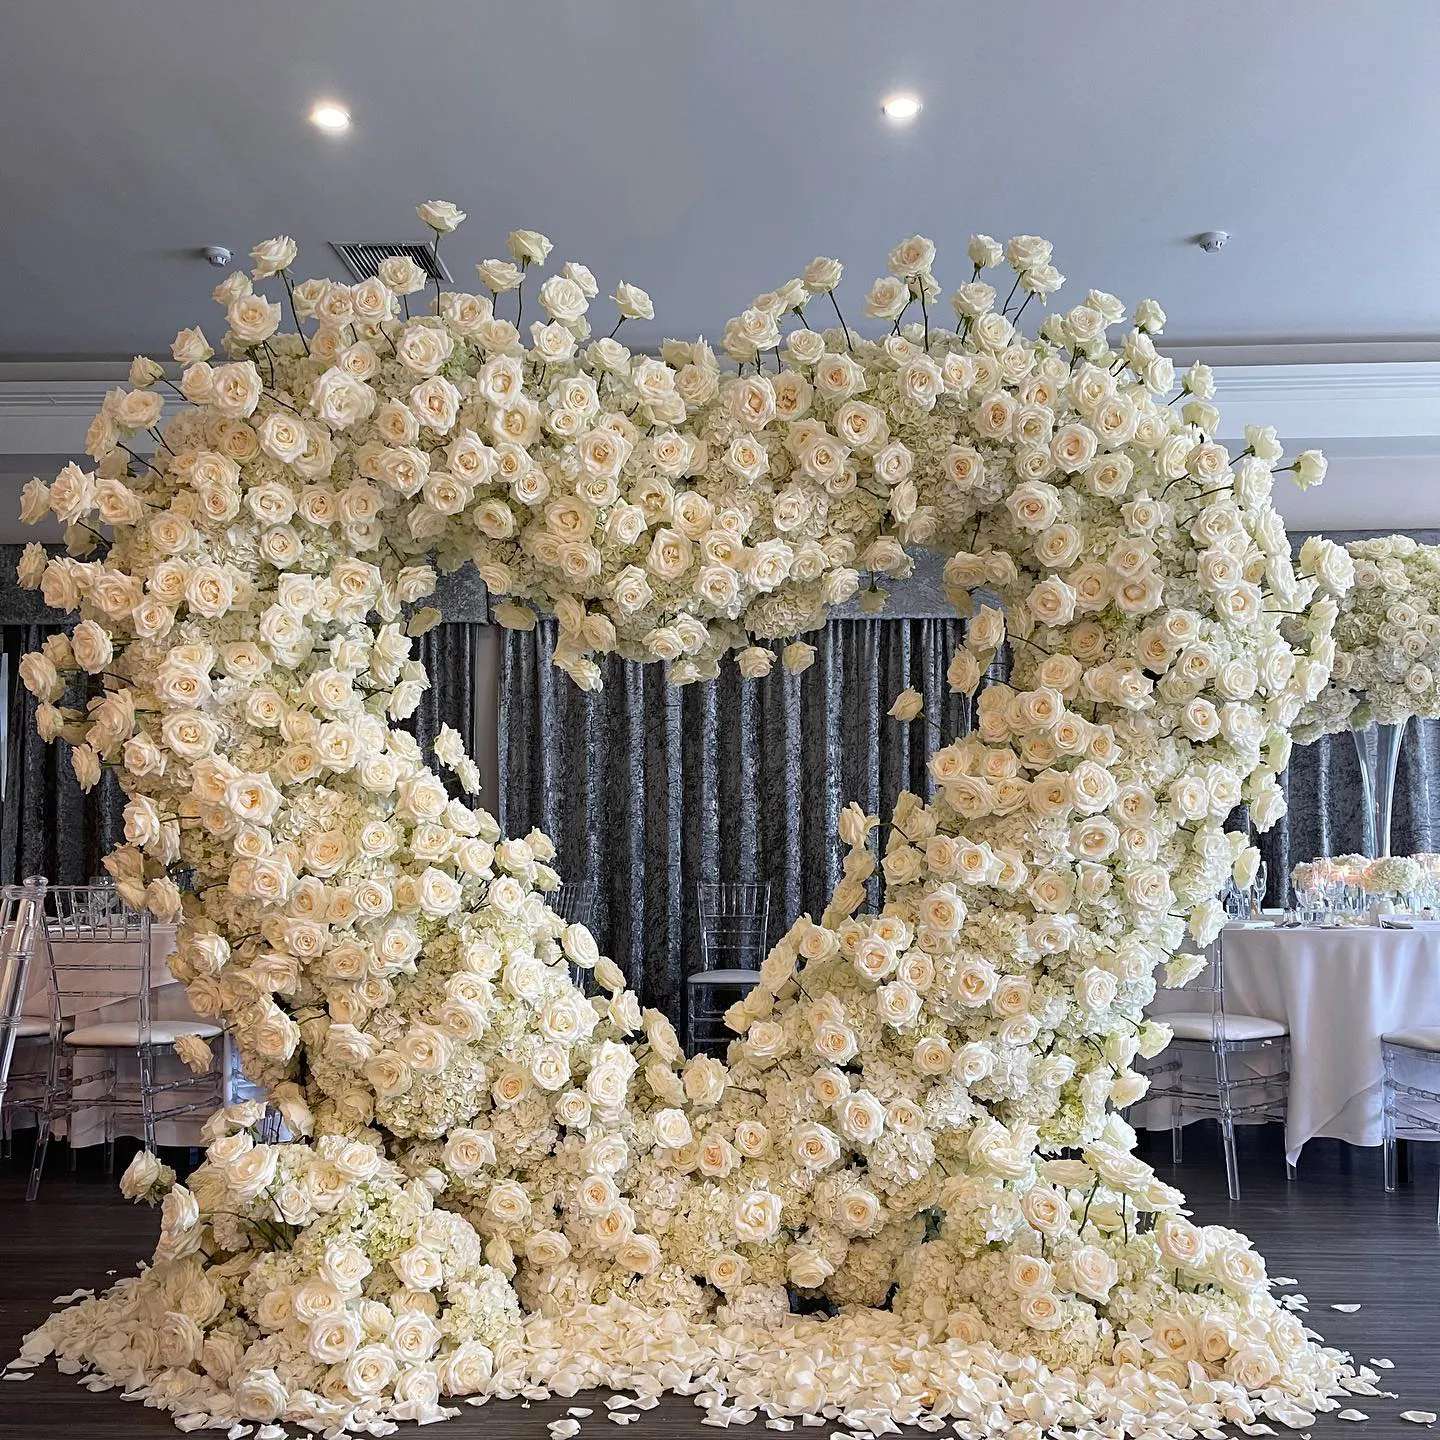 Arco de flor Artificial en forma de corazón, decoración creativa para boda, decoración para fiesta, flor Artificial en forma de corazón